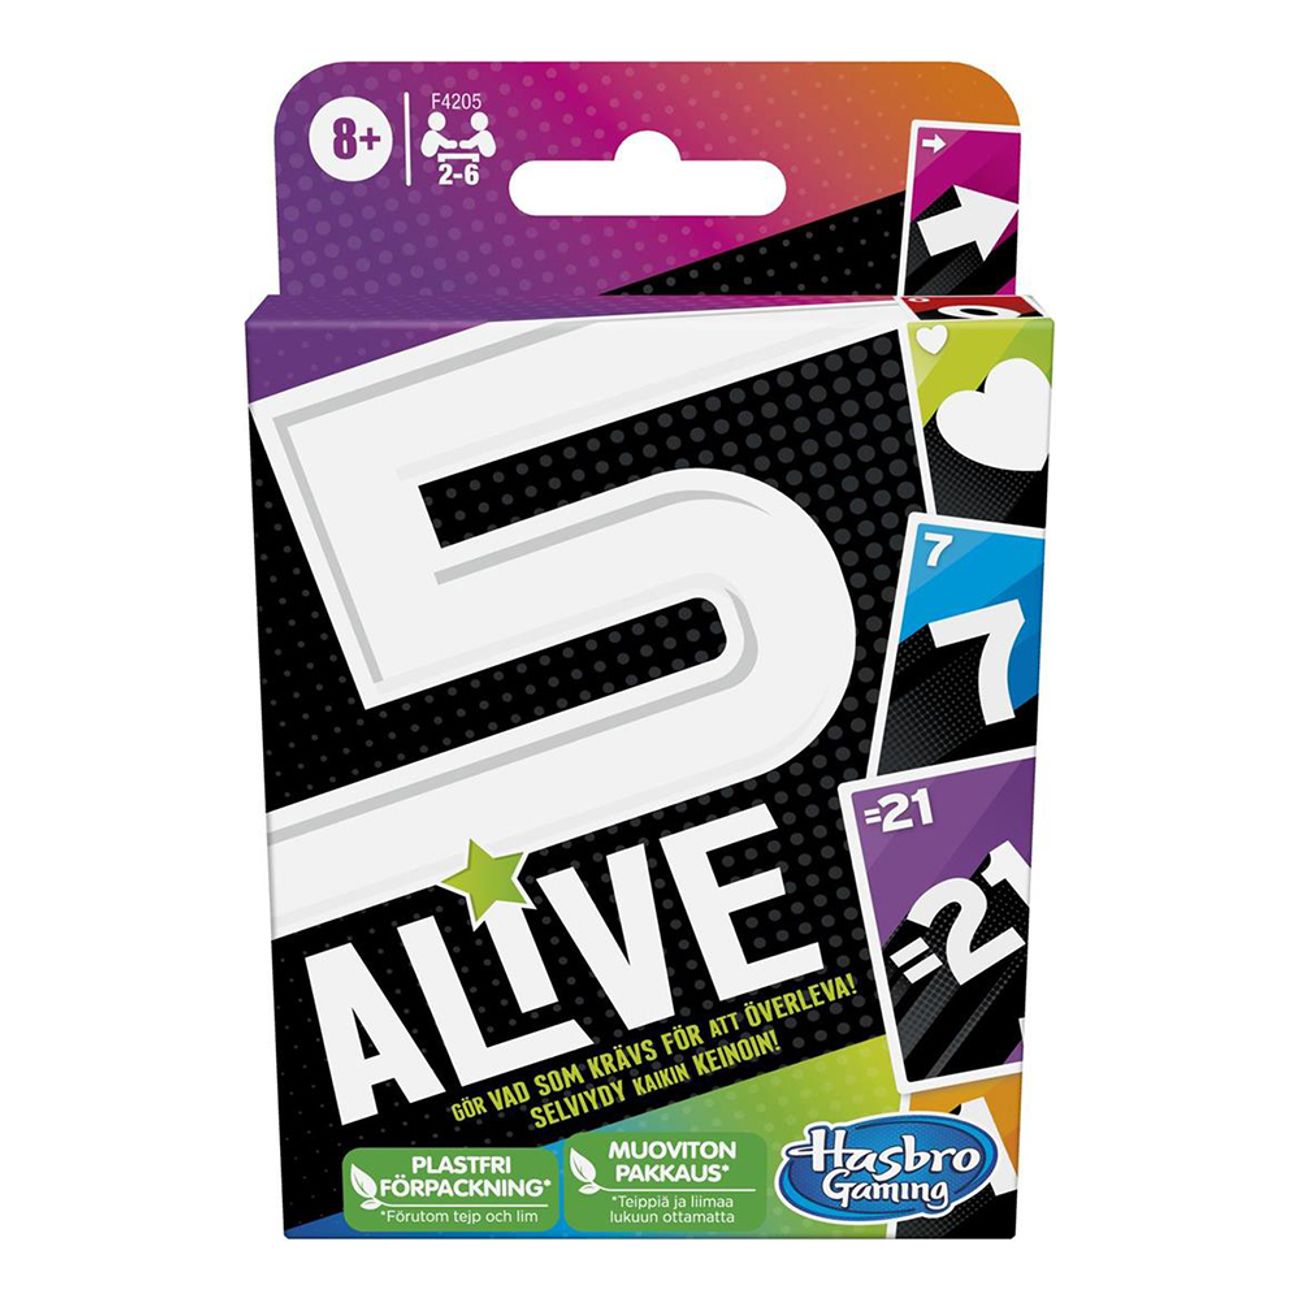 5-alive-kortspel-91621-1